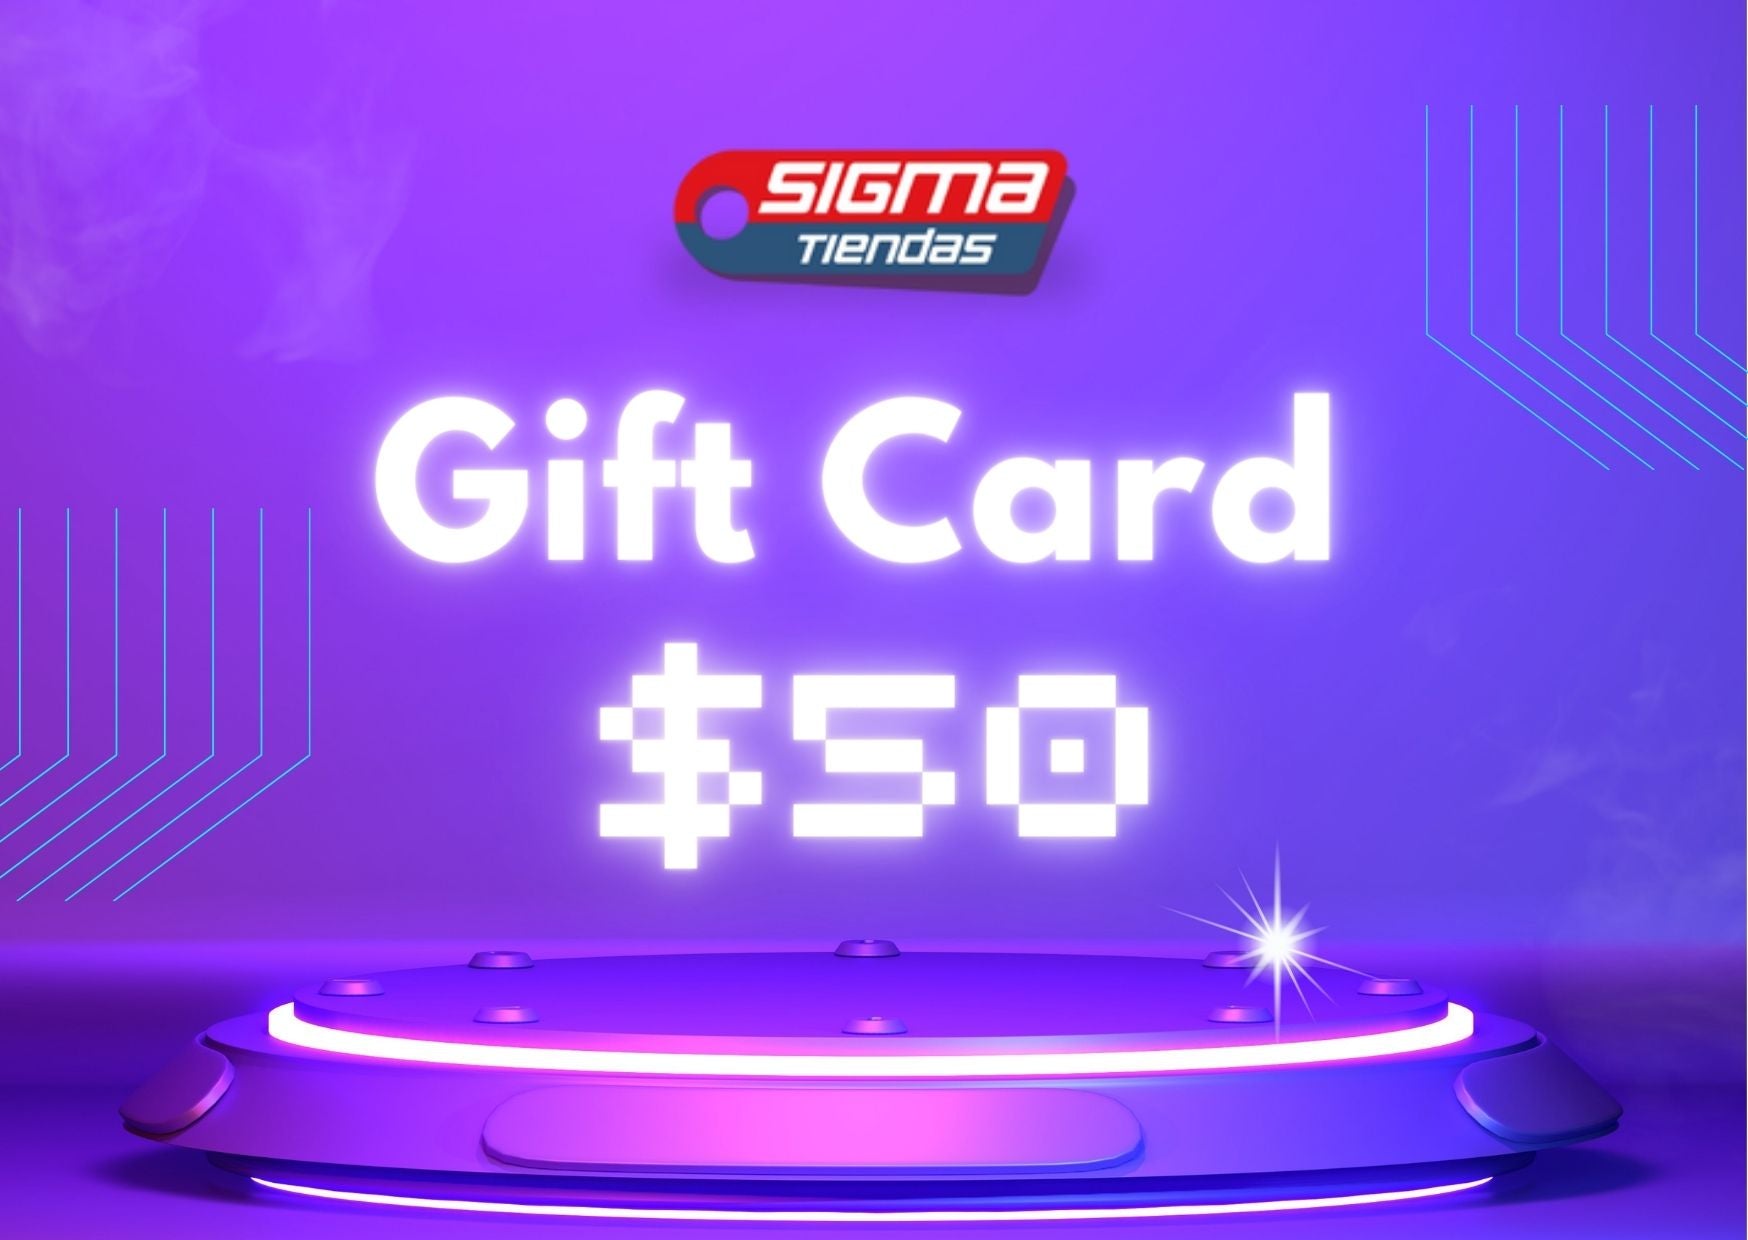 Gift Card Sigma $50